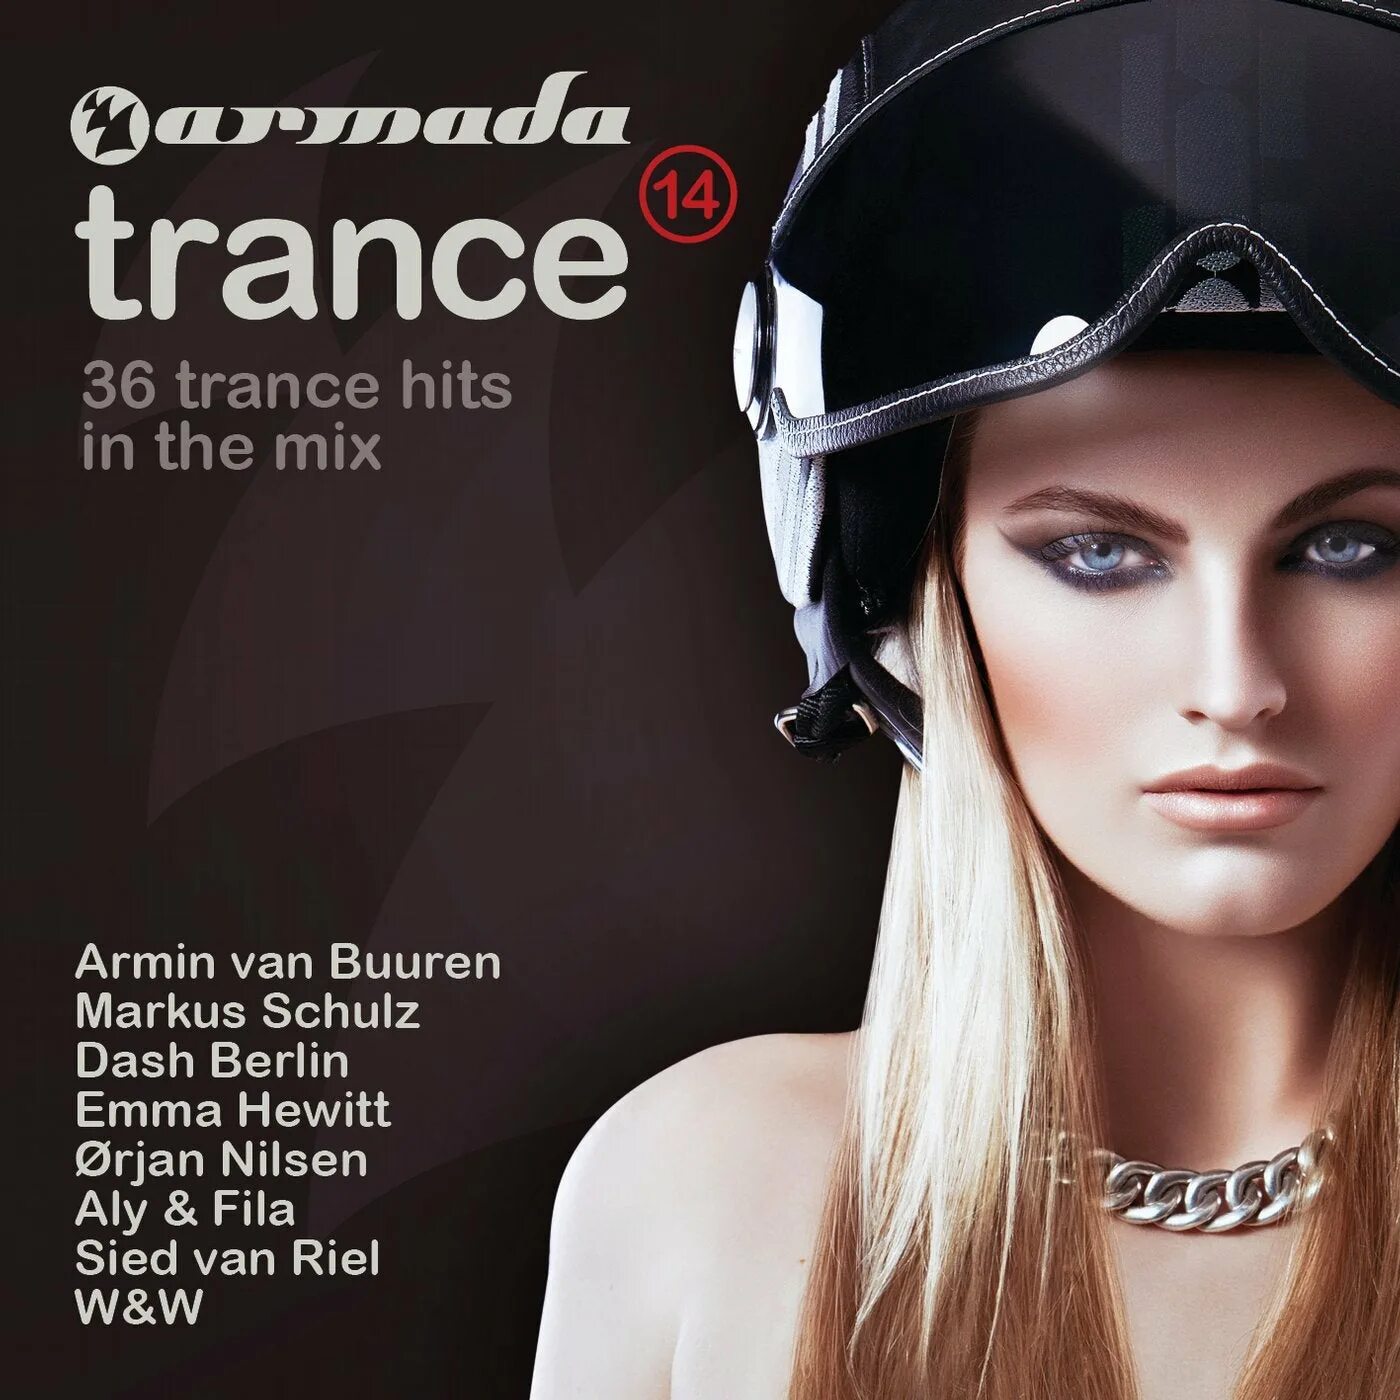 Armada Trance. Trance Mix. Trance Music диск. Известные музыканты транс.